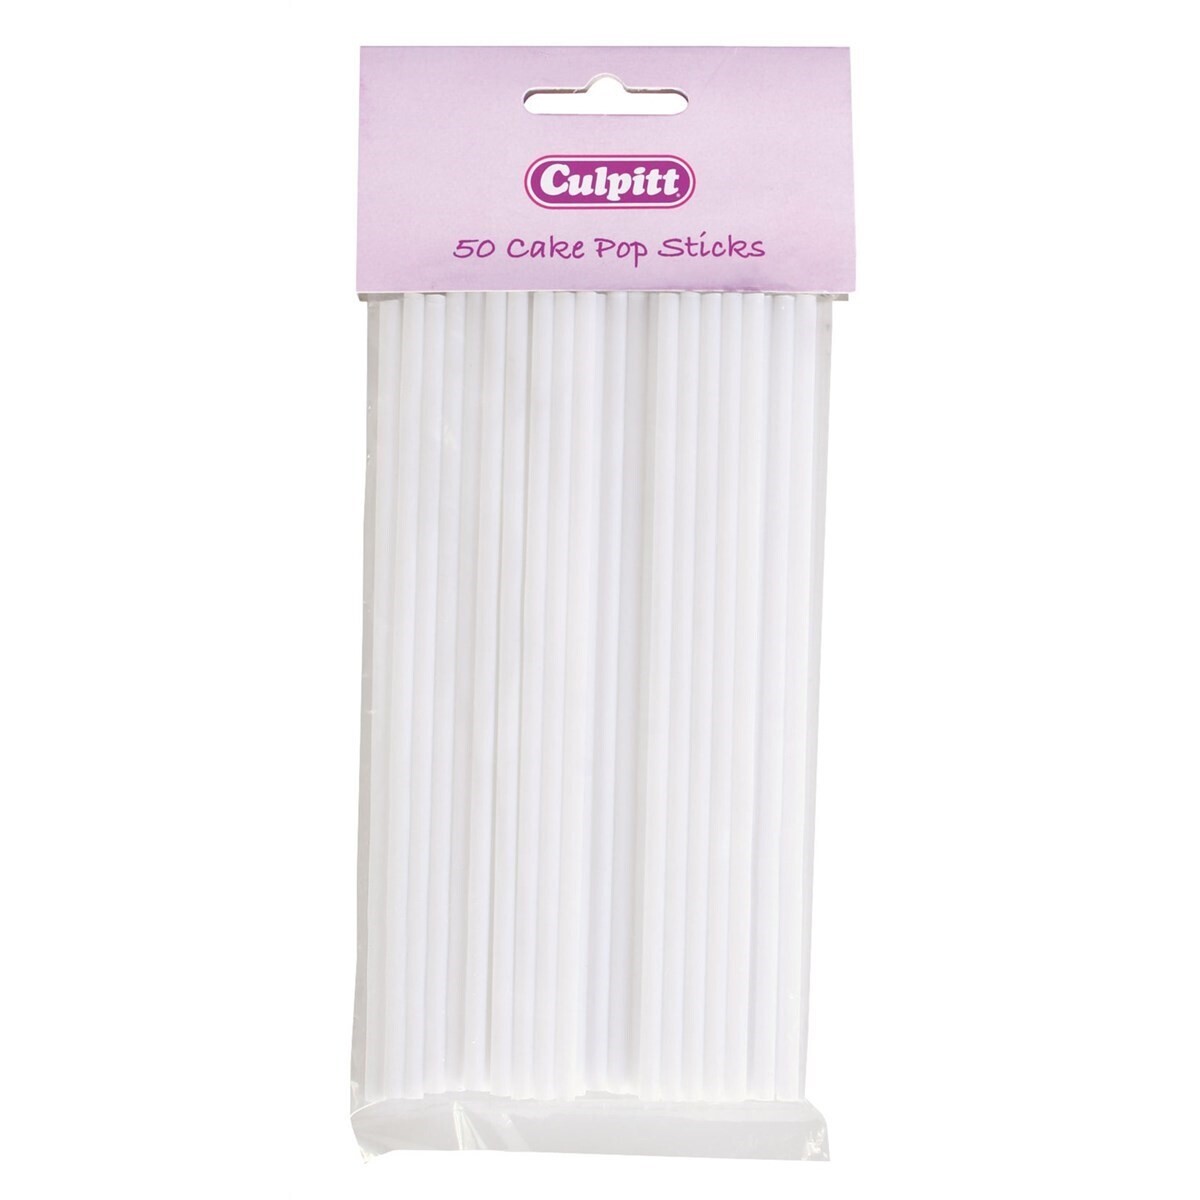 Culpitt Cake Pop Sticks -WHITE Plastic - Πλαστικά Στικ για Cake Pops -Λευκά 50τεμ